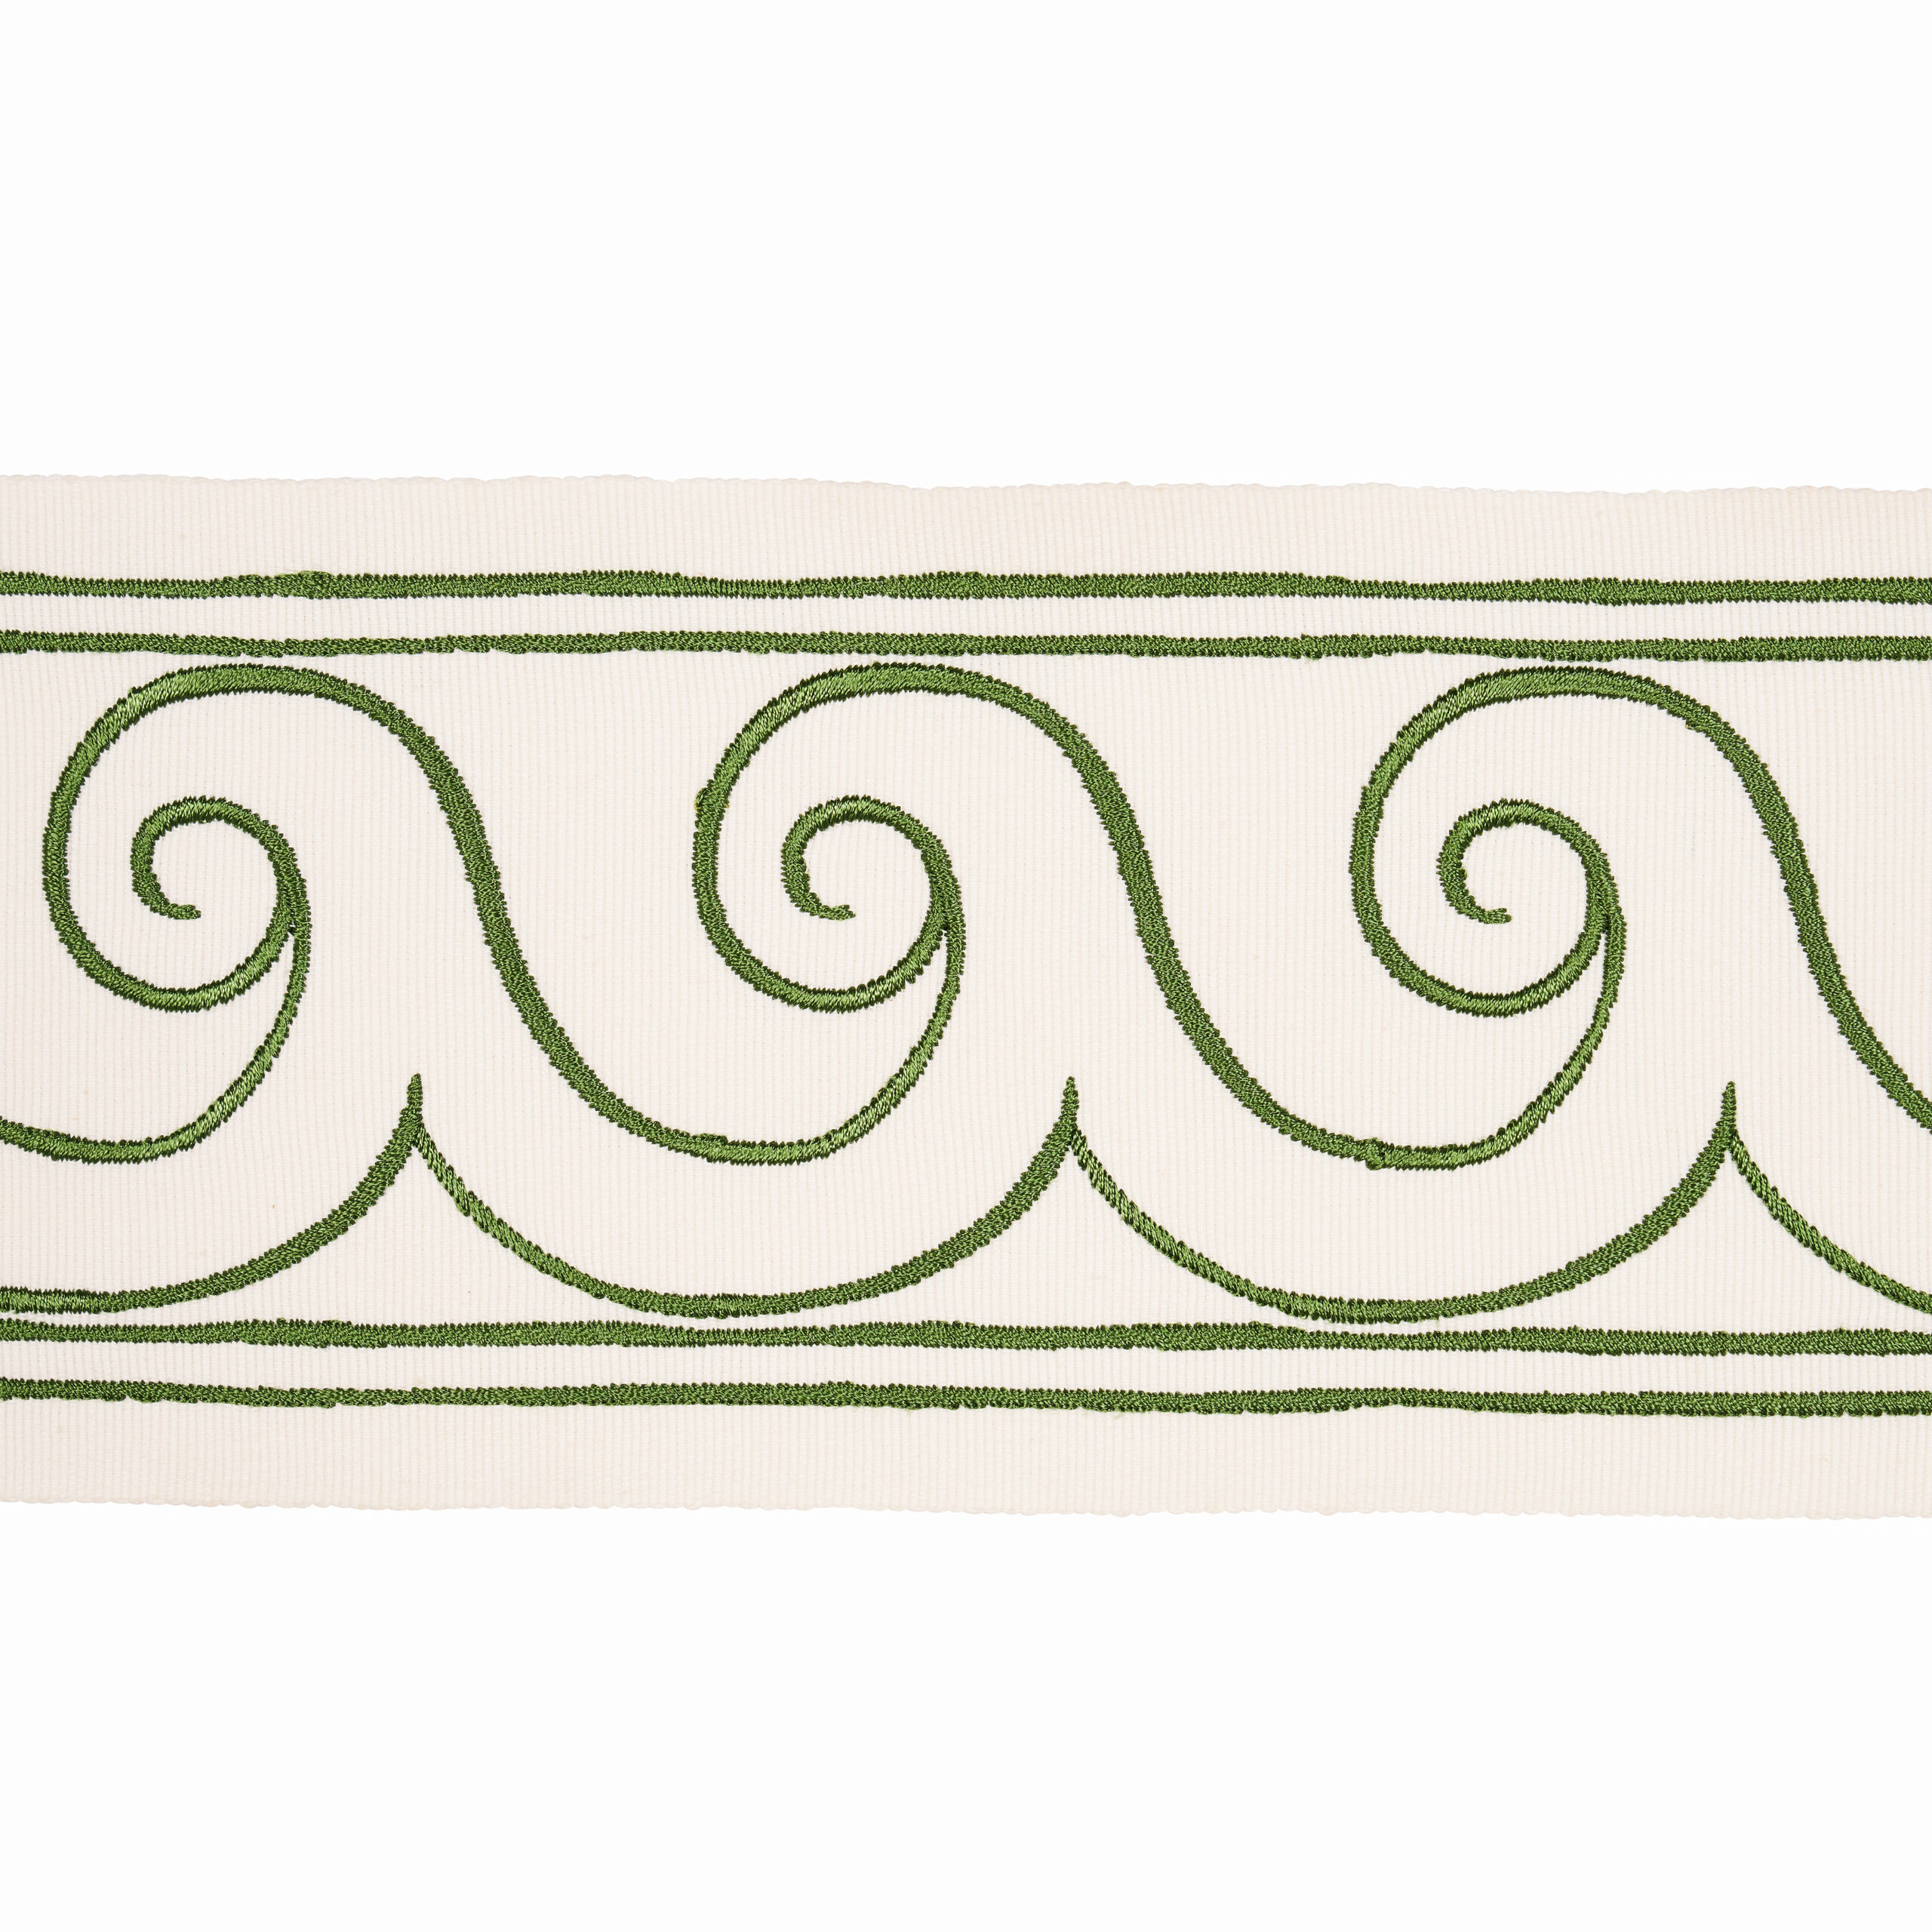 Greek Waves Trim in Green on Ivory